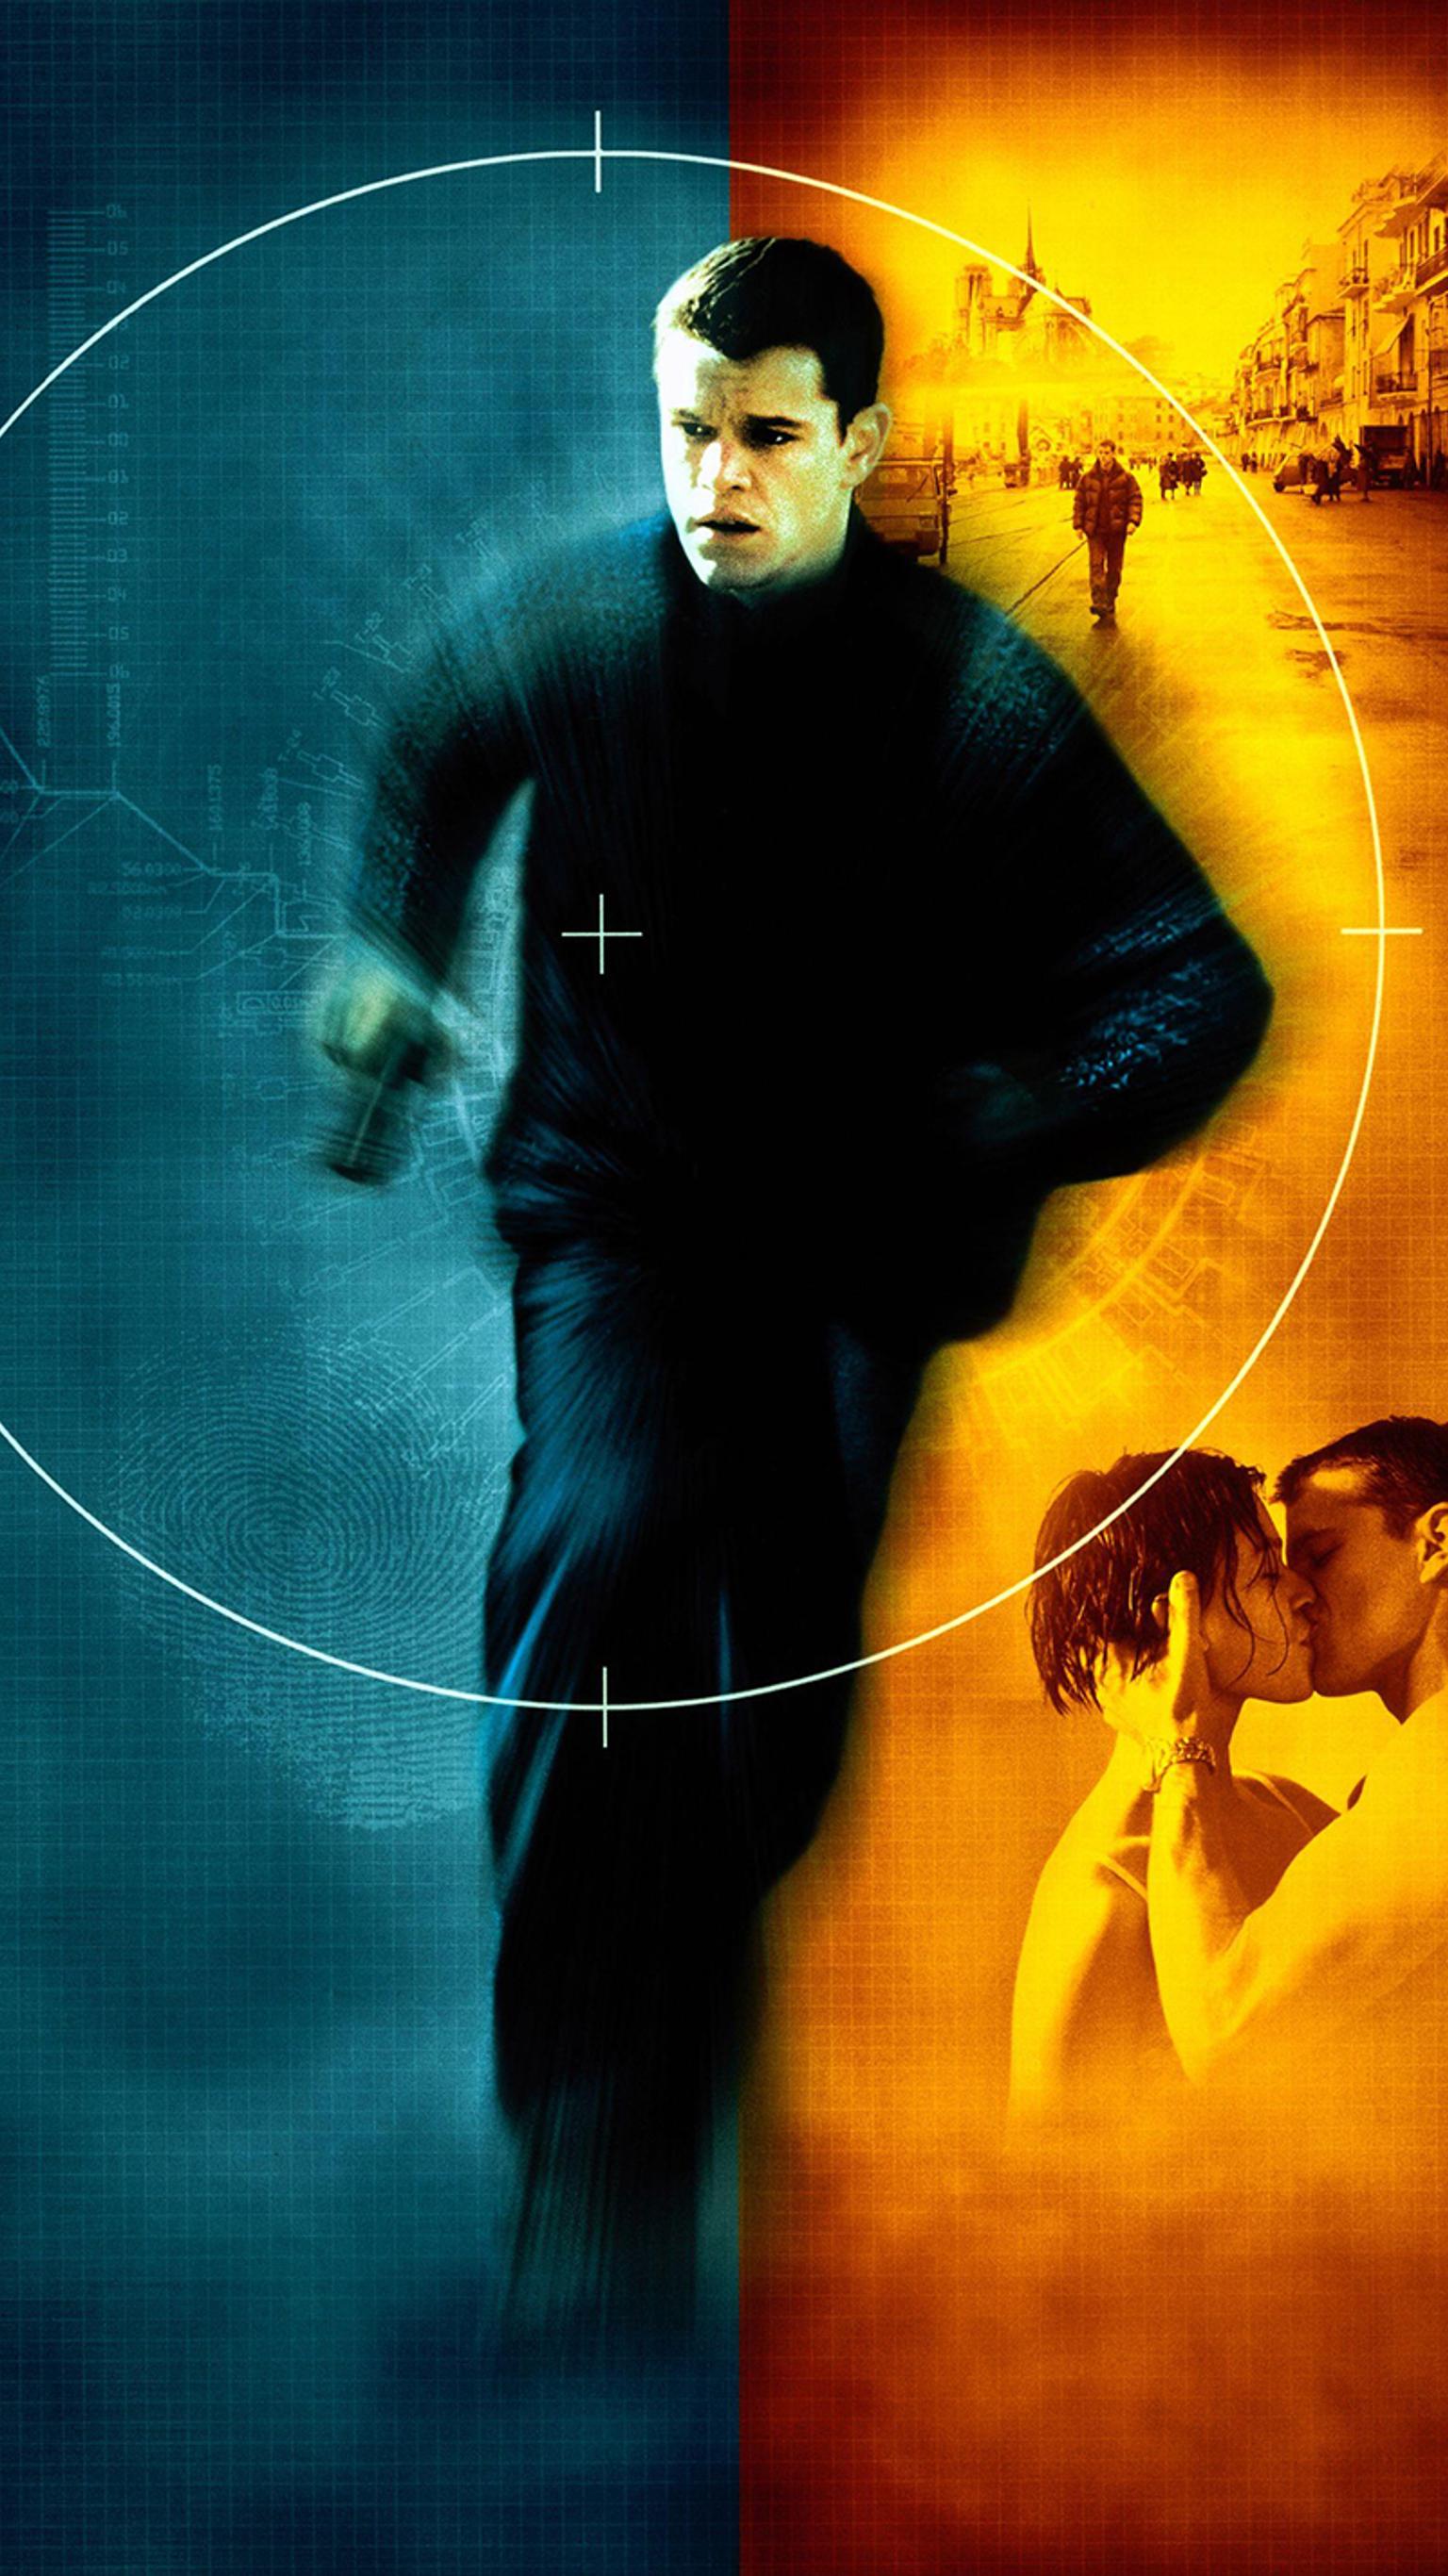 Jason Bourne Film Series Wallpapers - Wallpaper Cave